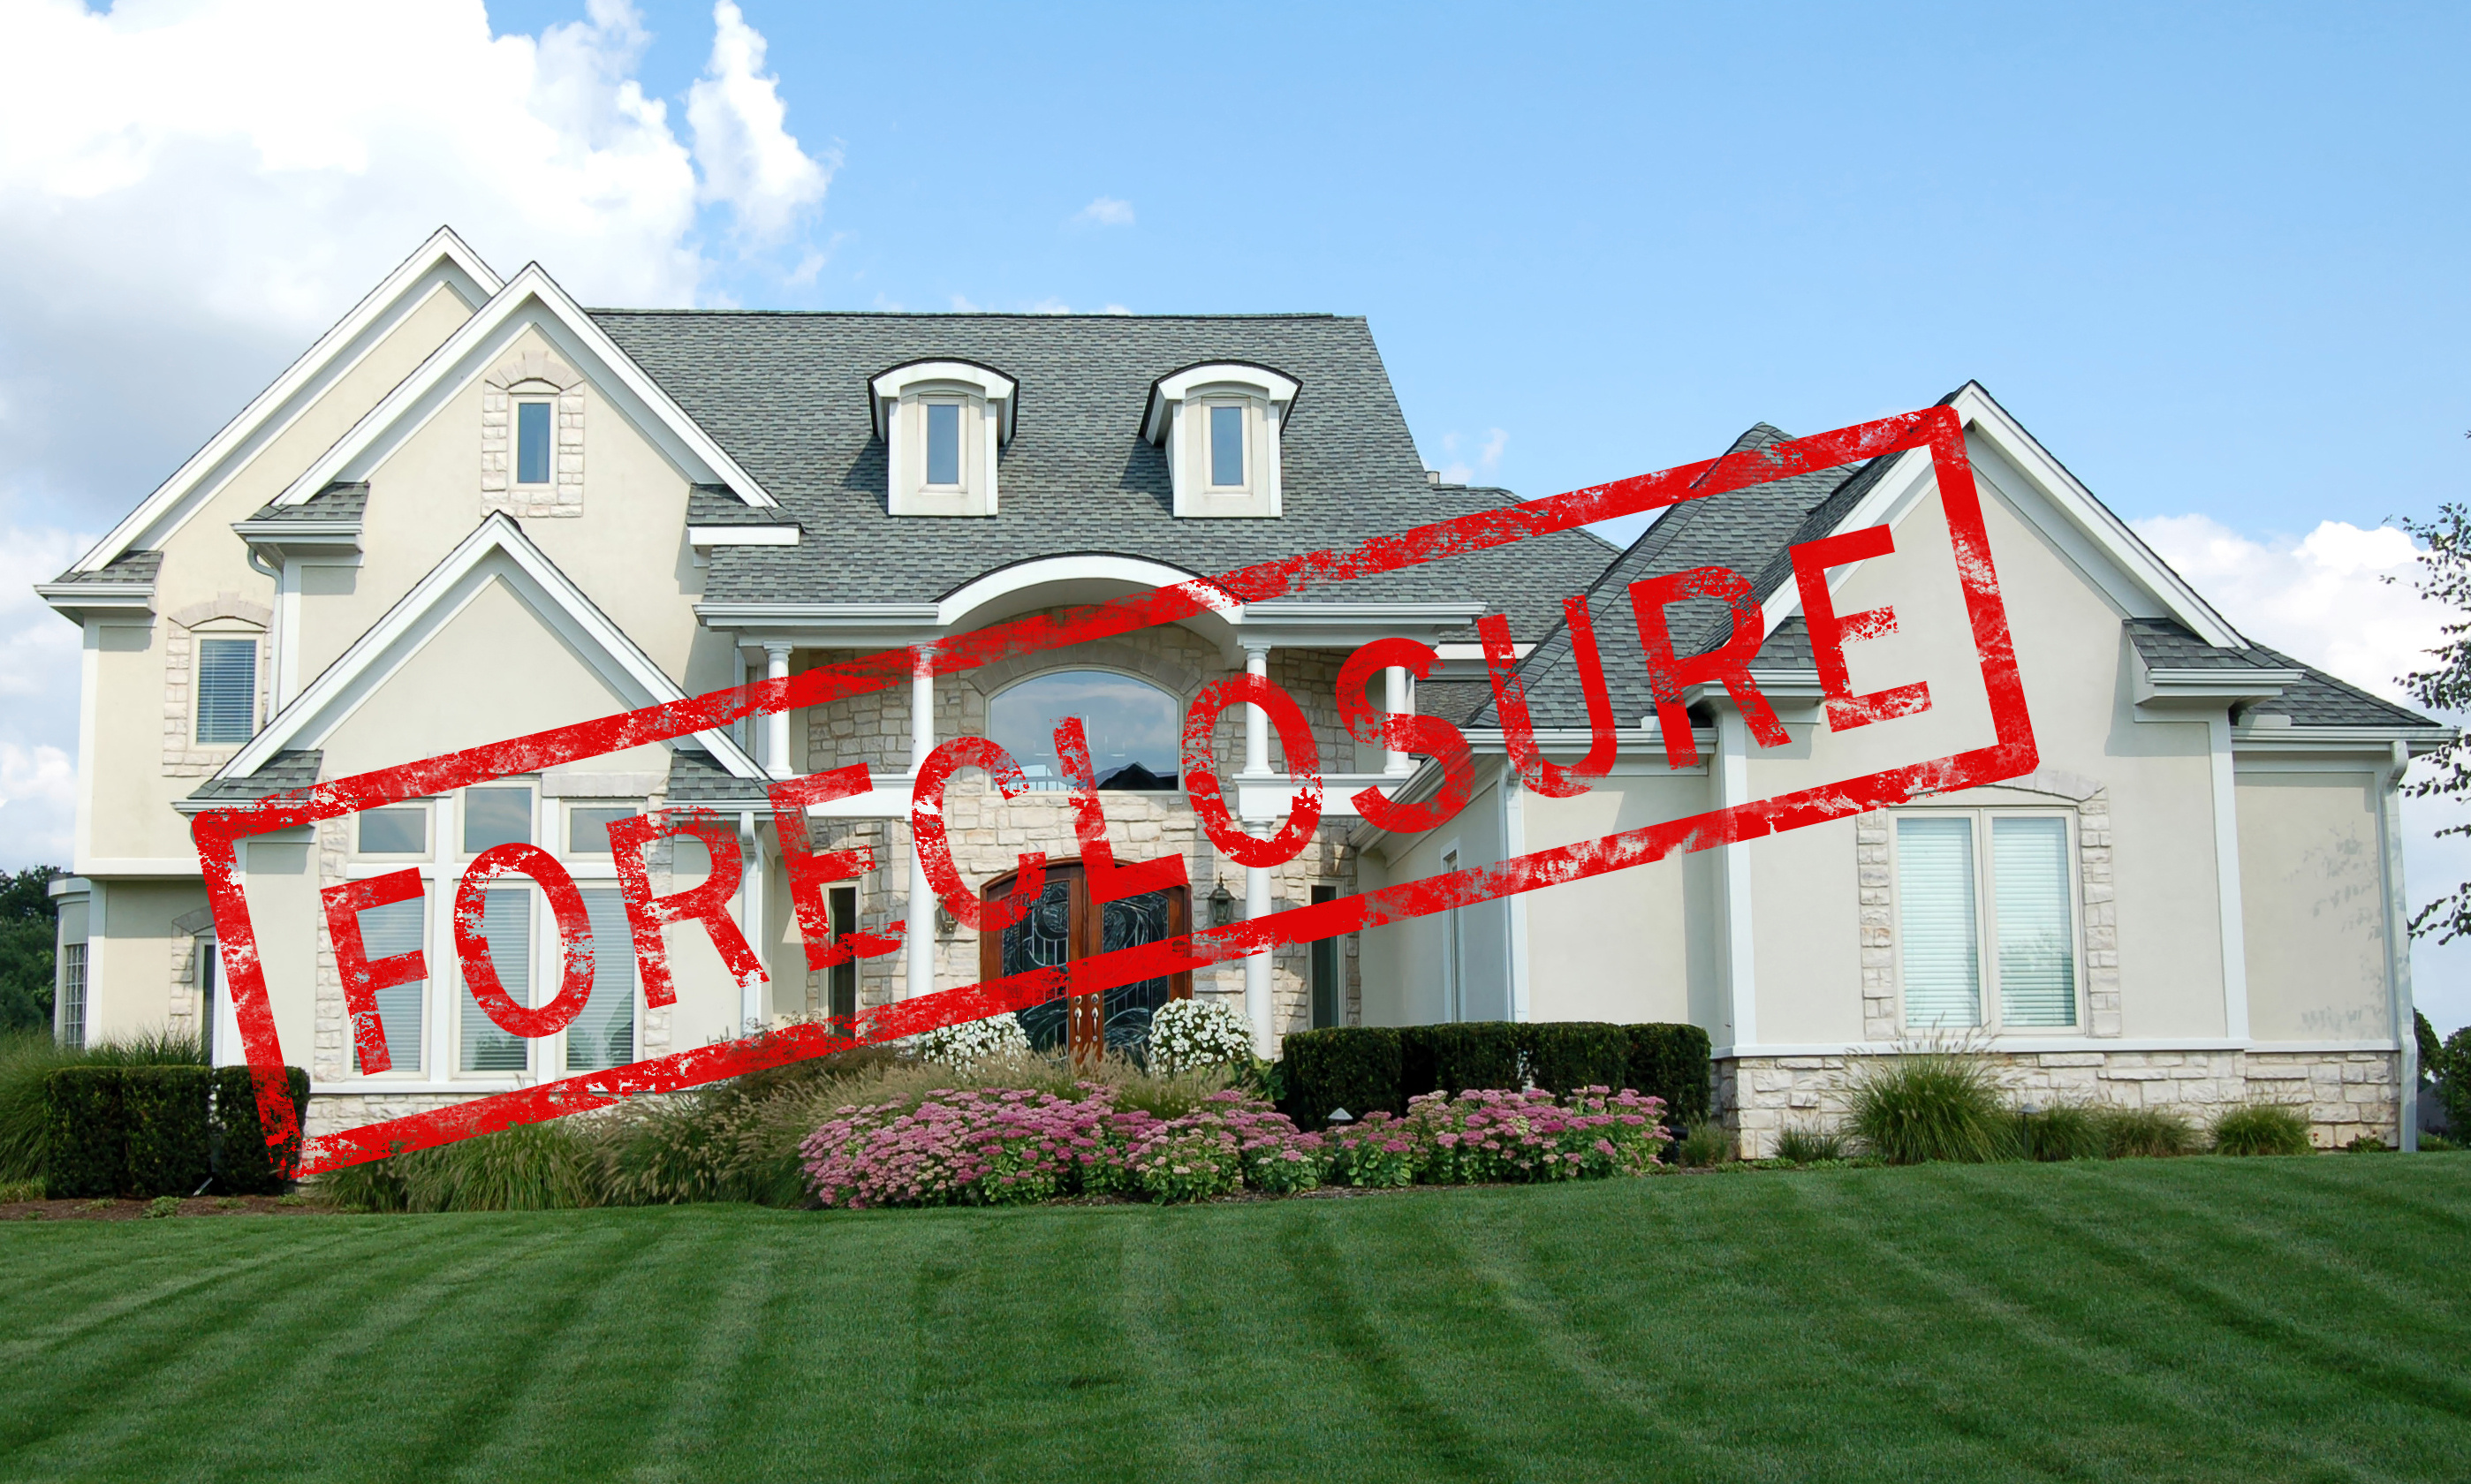 Call AAAnderson Associates Inc. when you need appraisals regarding Clark foreclosures